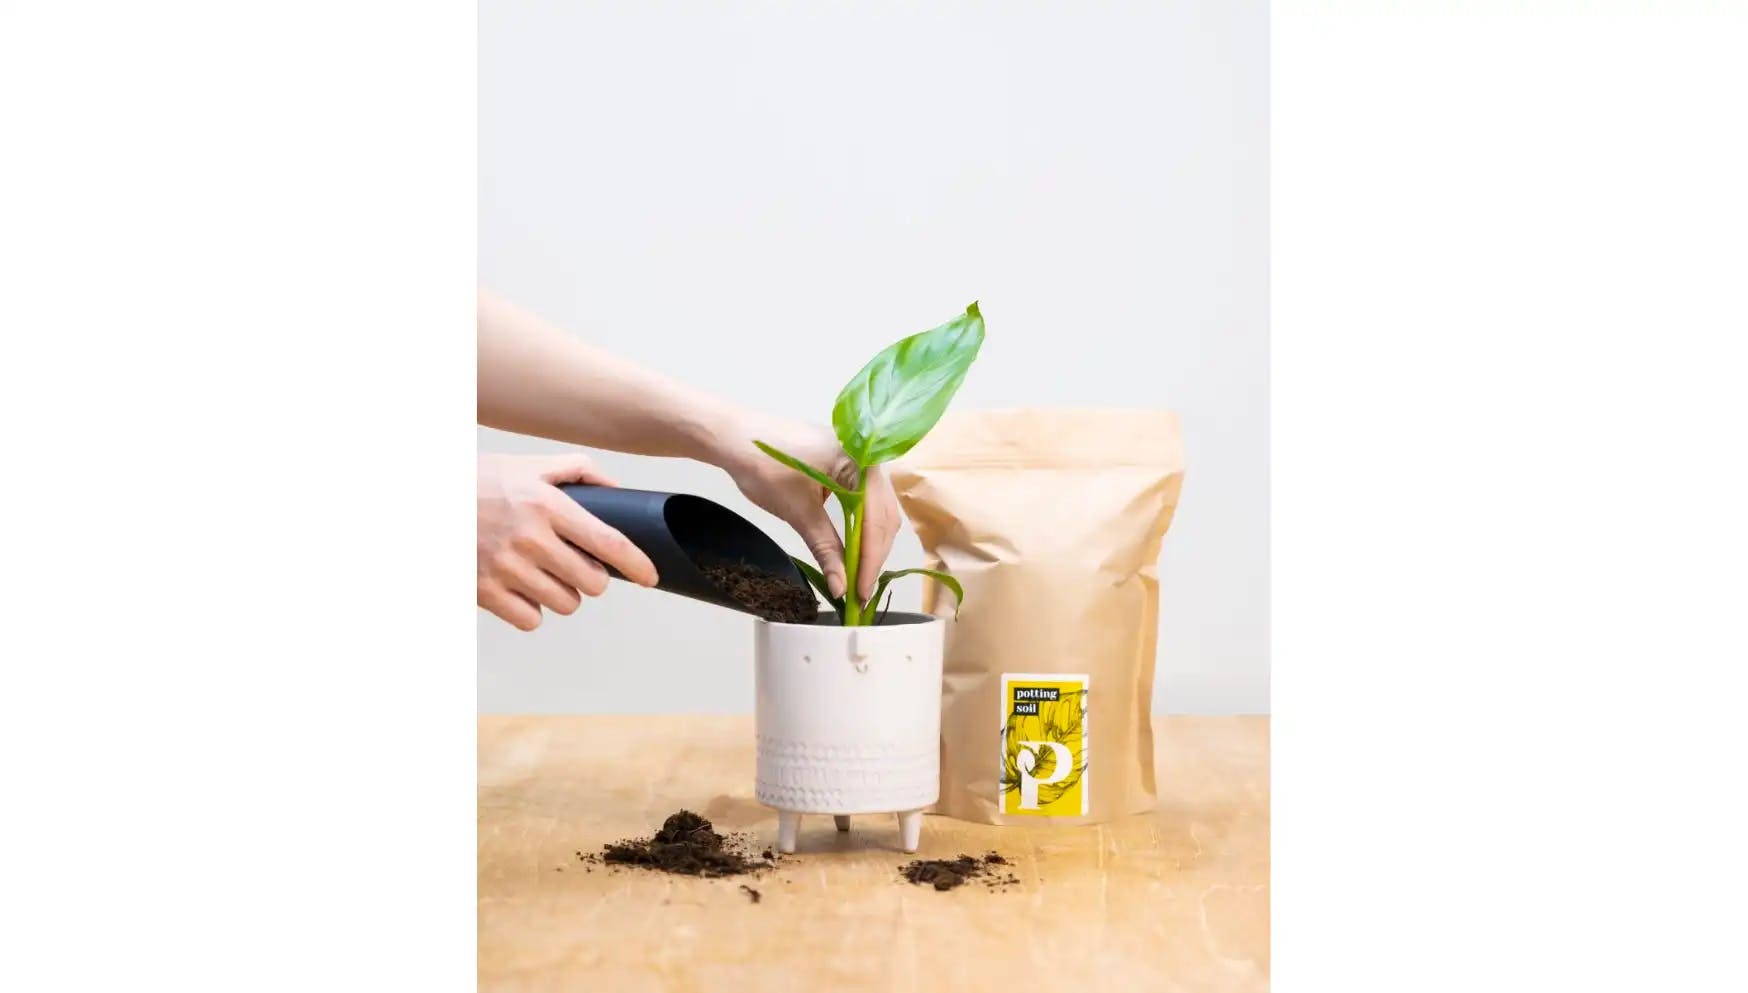 Potting shovel with plant